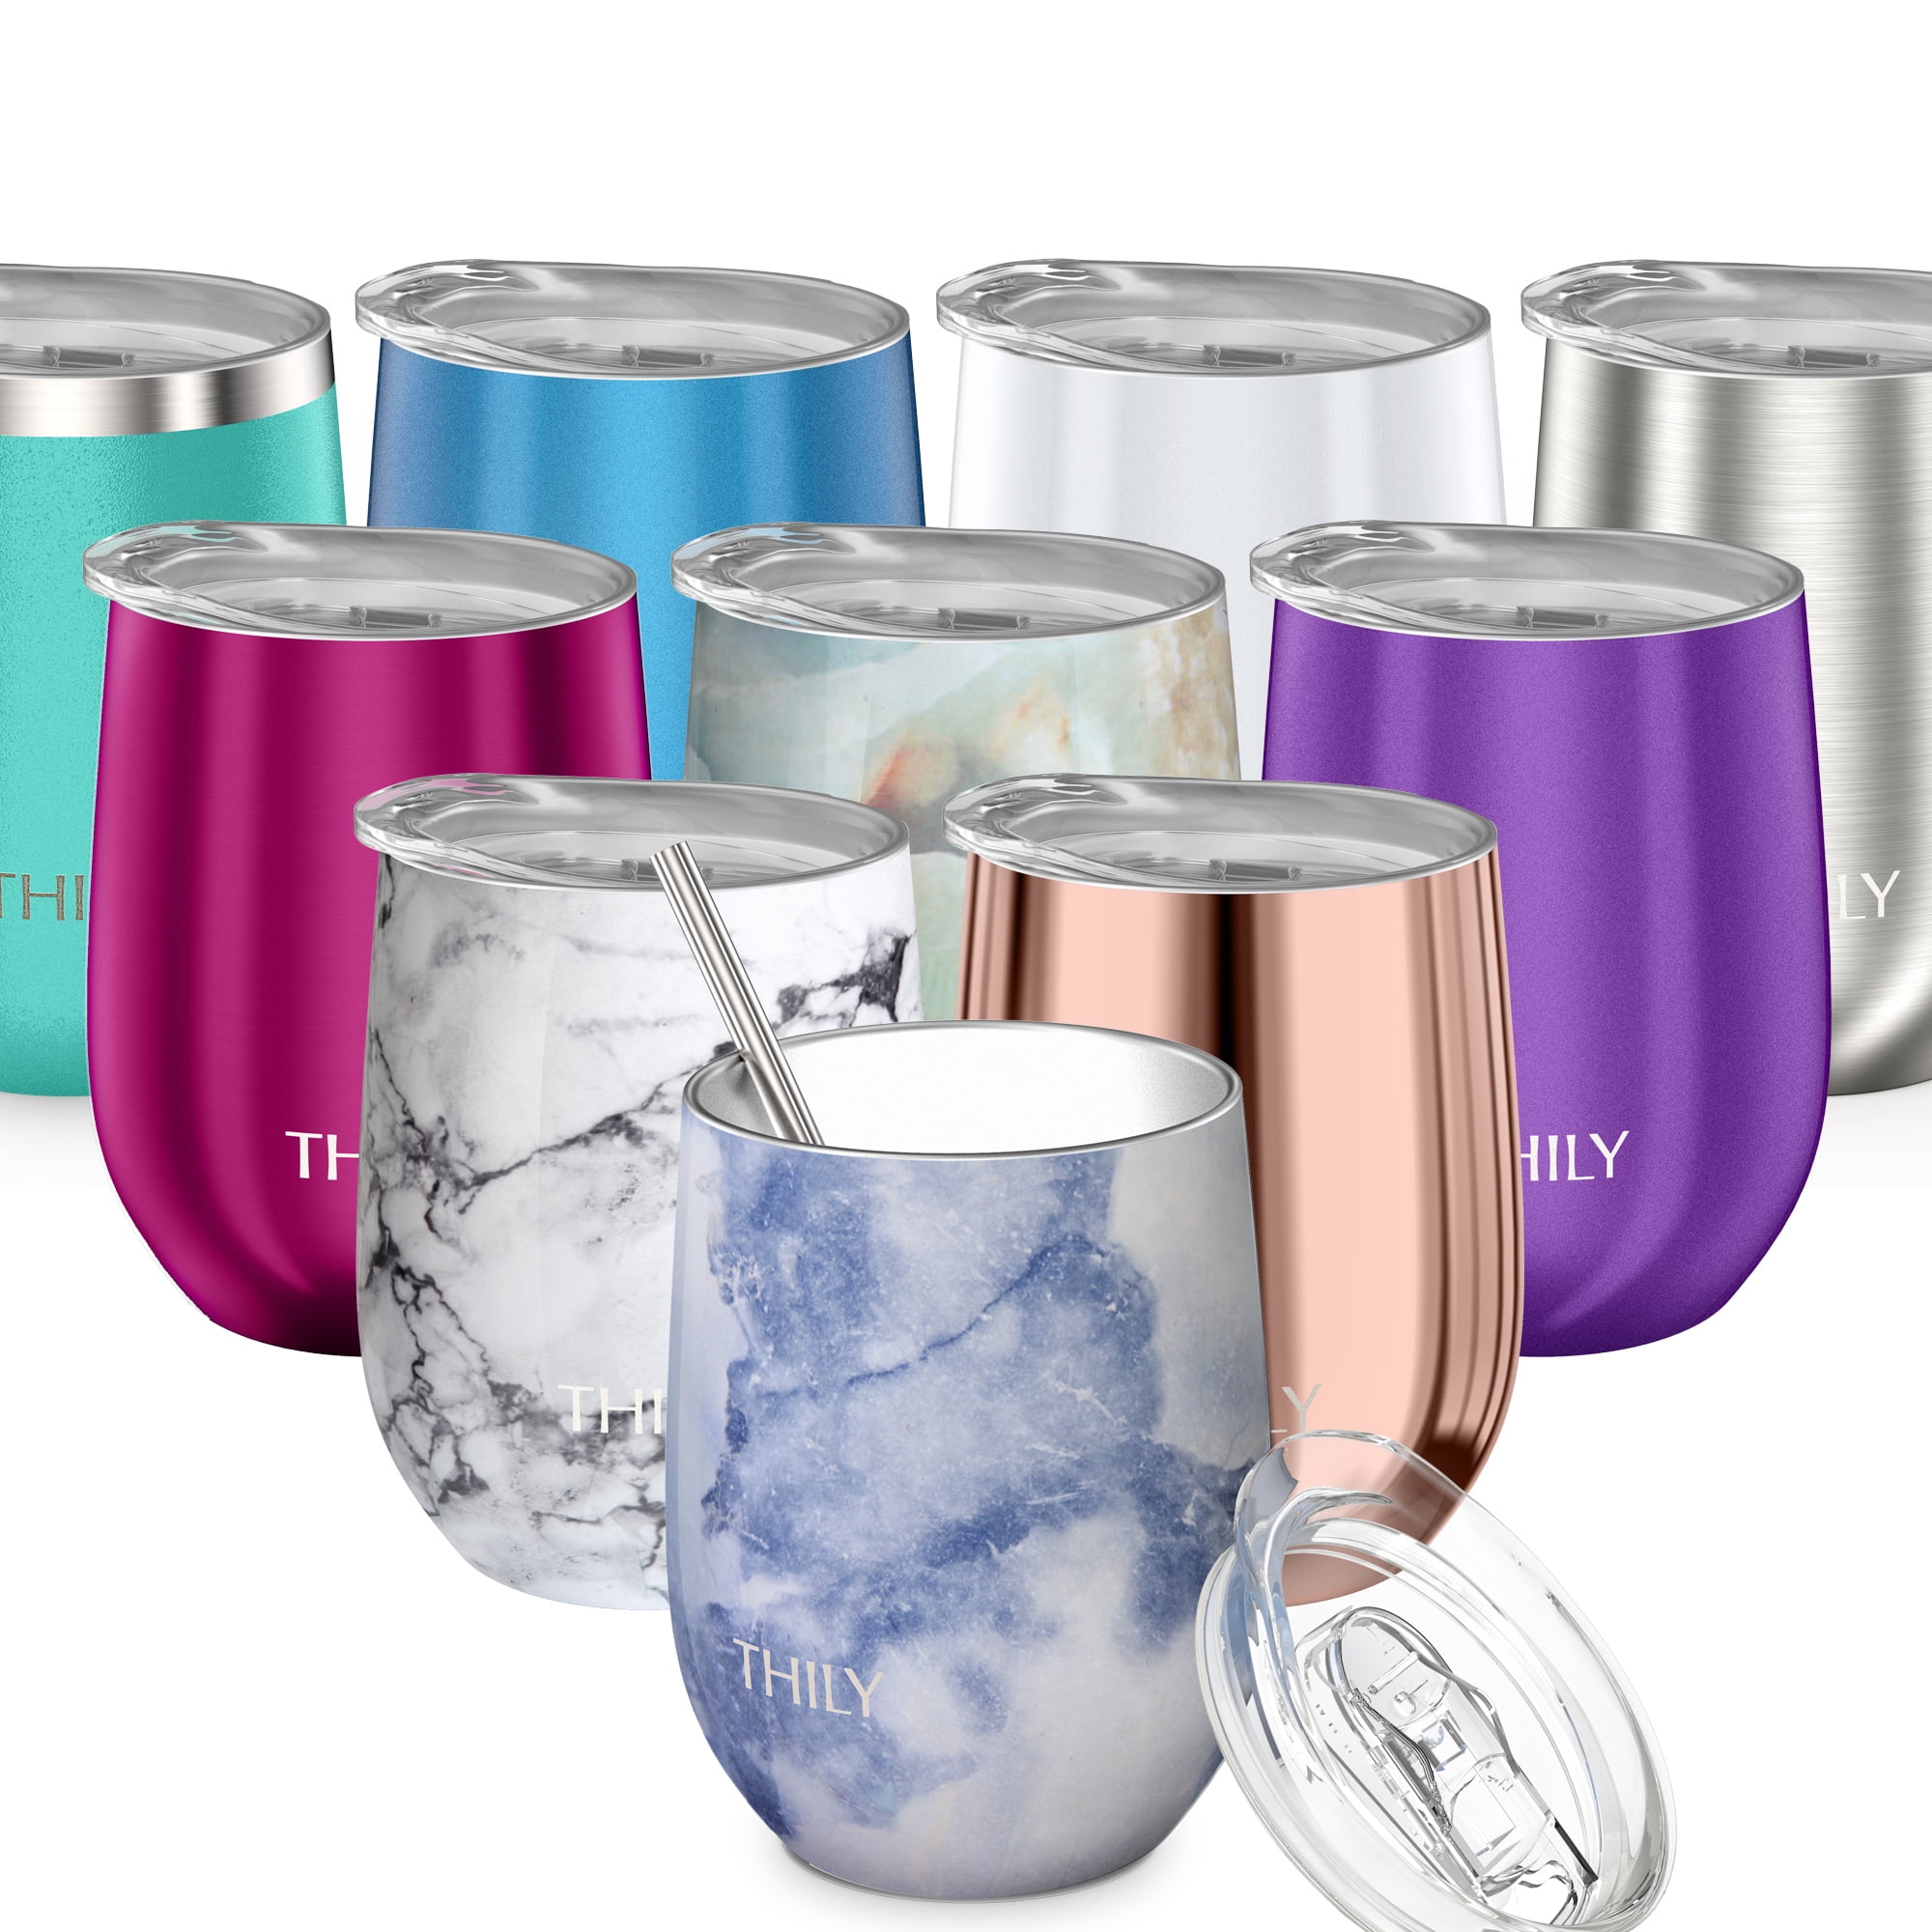 Best picnic wine glasses 2022: Plastic and metal designs